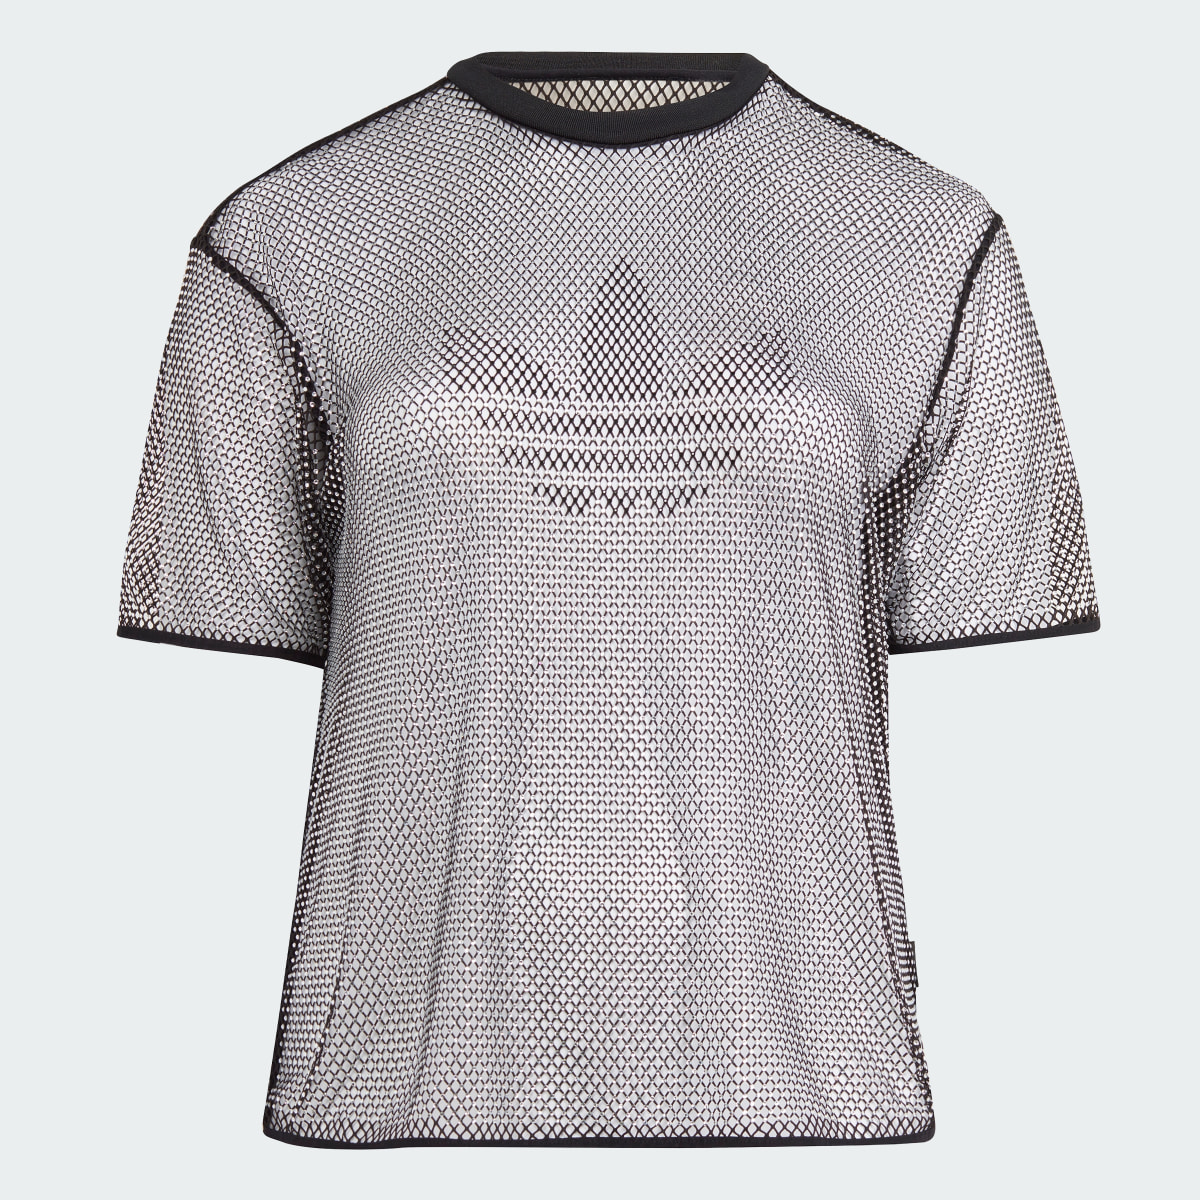 Adidas Adilenium Rhinestone T-Shirt. 5